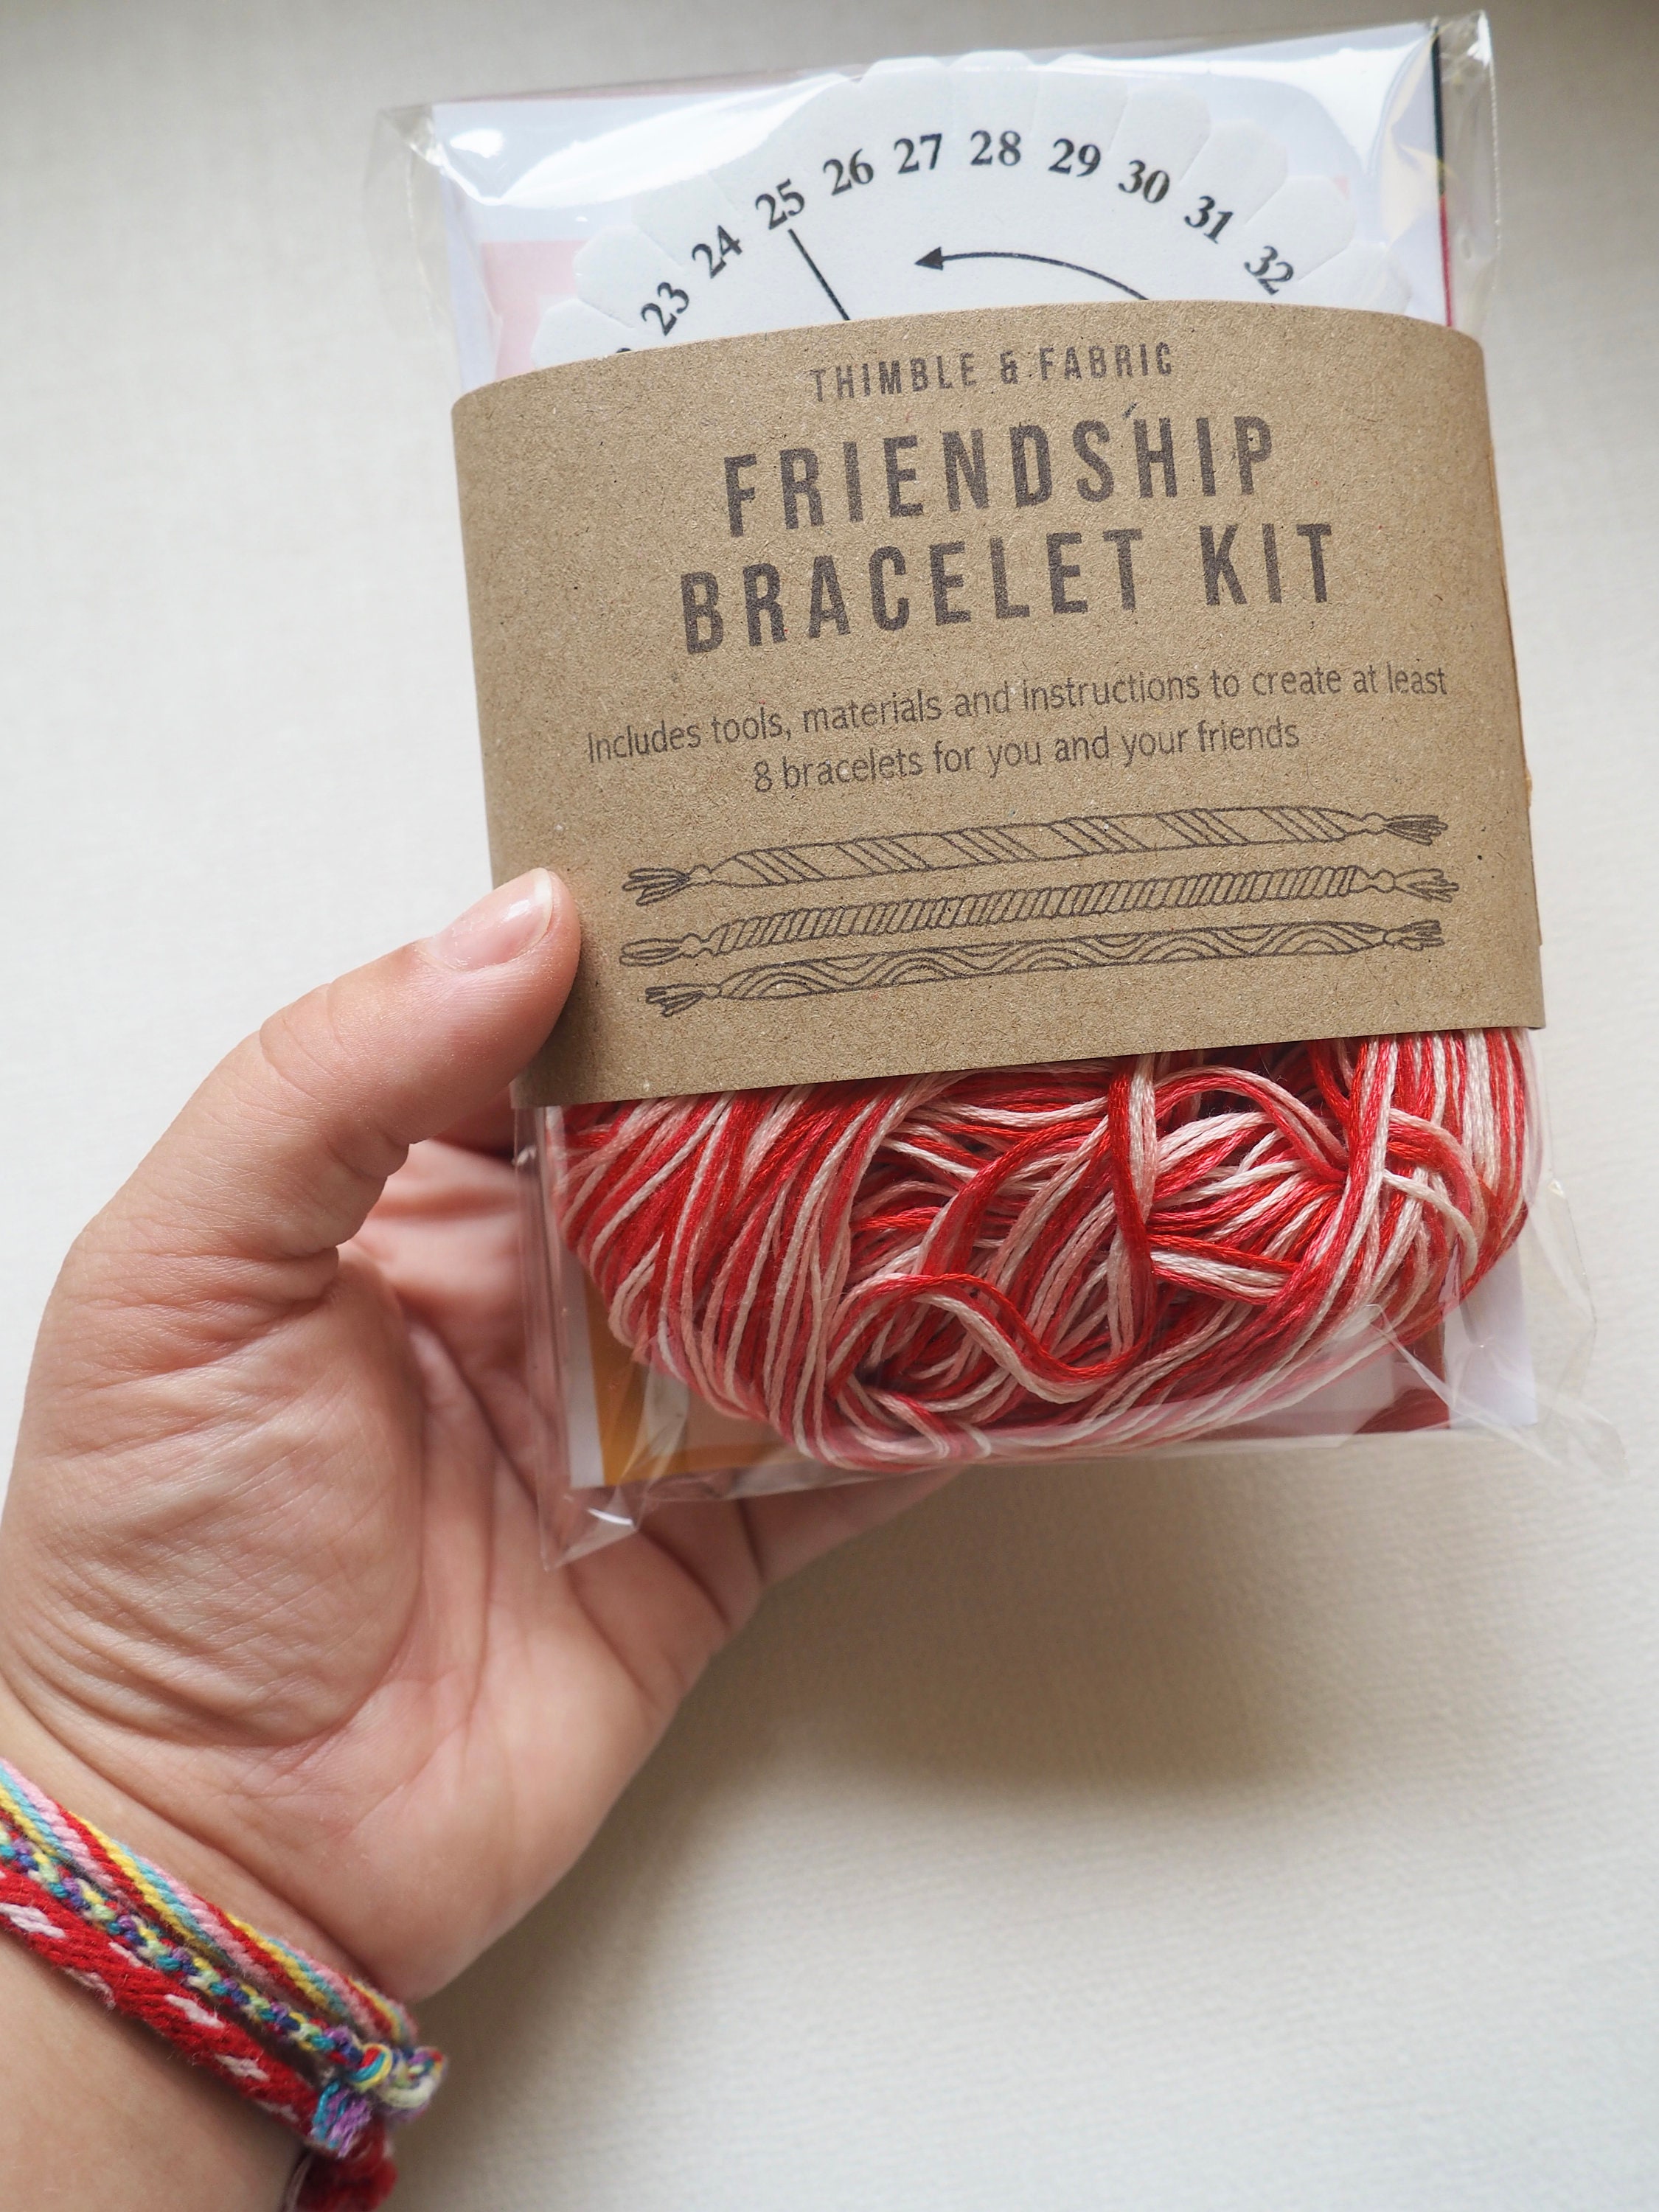 Friendship Bracelet Making Kit. Relaxing Craft Kit for Adults